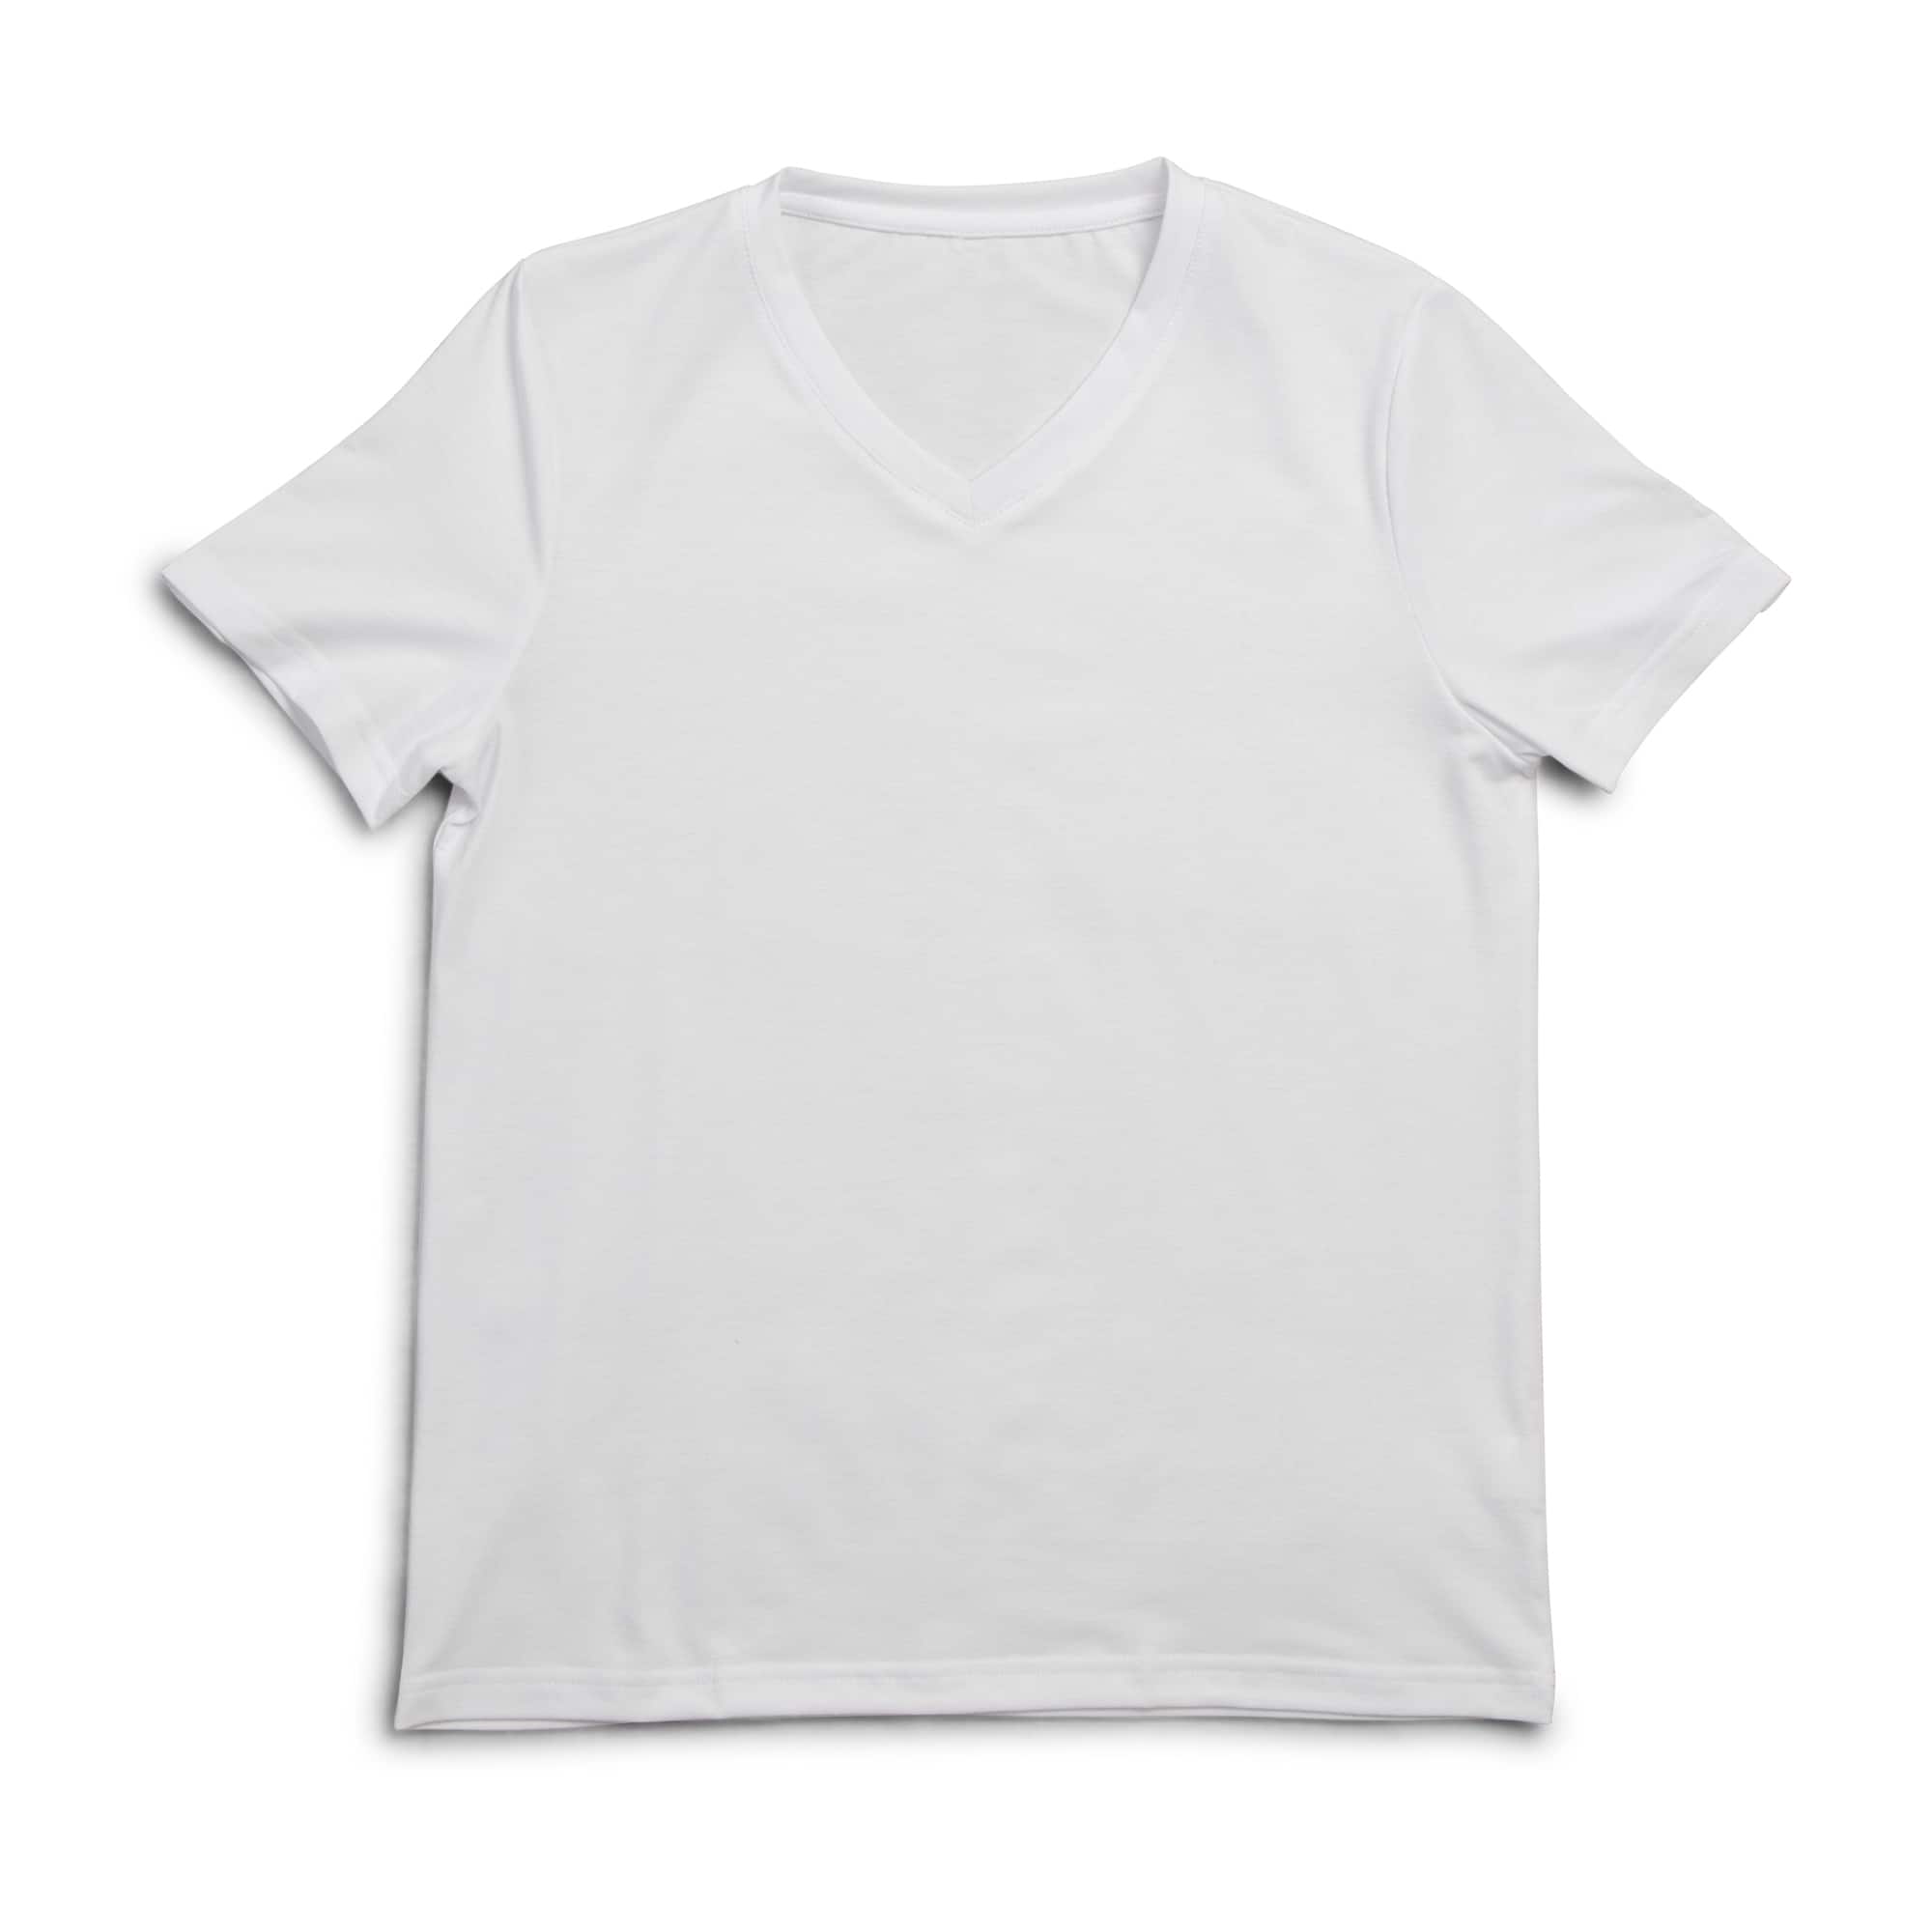  Womens Polyester Spandex Shirt Sleeve Love Print T Shirt Top  Blouse Shirt Women (Black, S) : Sports & Outdoors